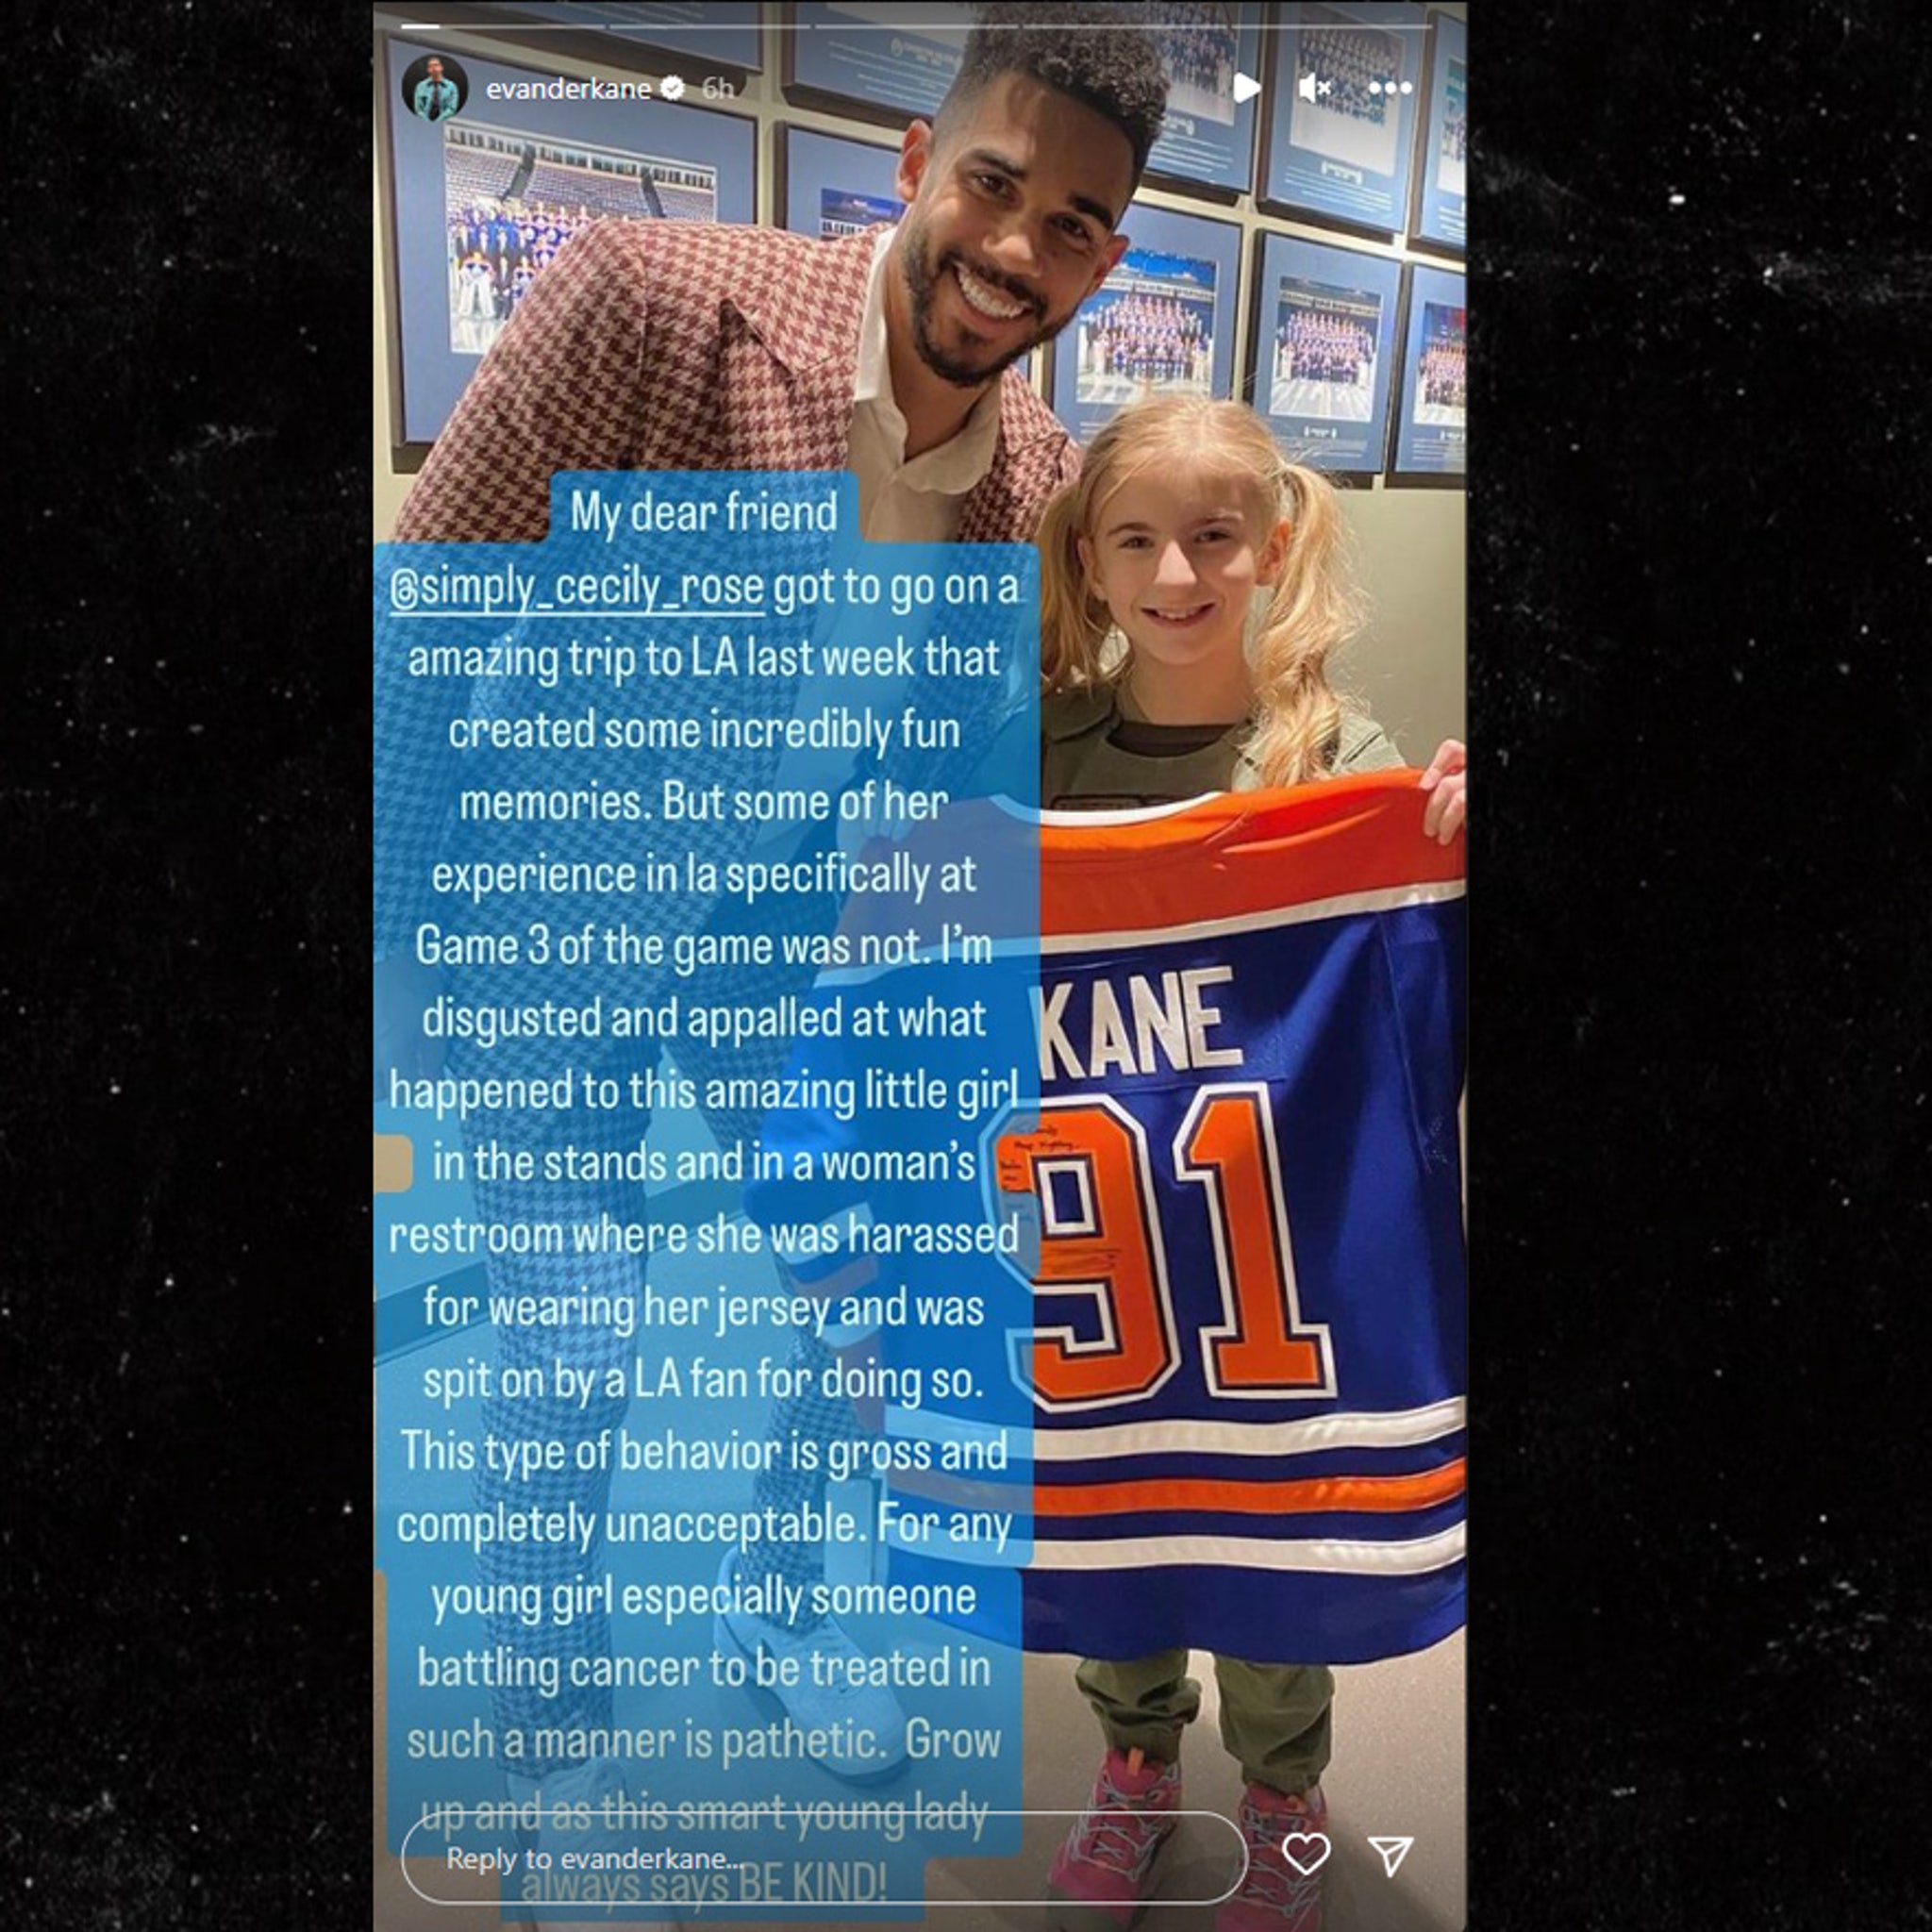 Kings fan spat on 10-year-old cancer patient wearing Oilers jersey,  Edmonton's Evander Kane says